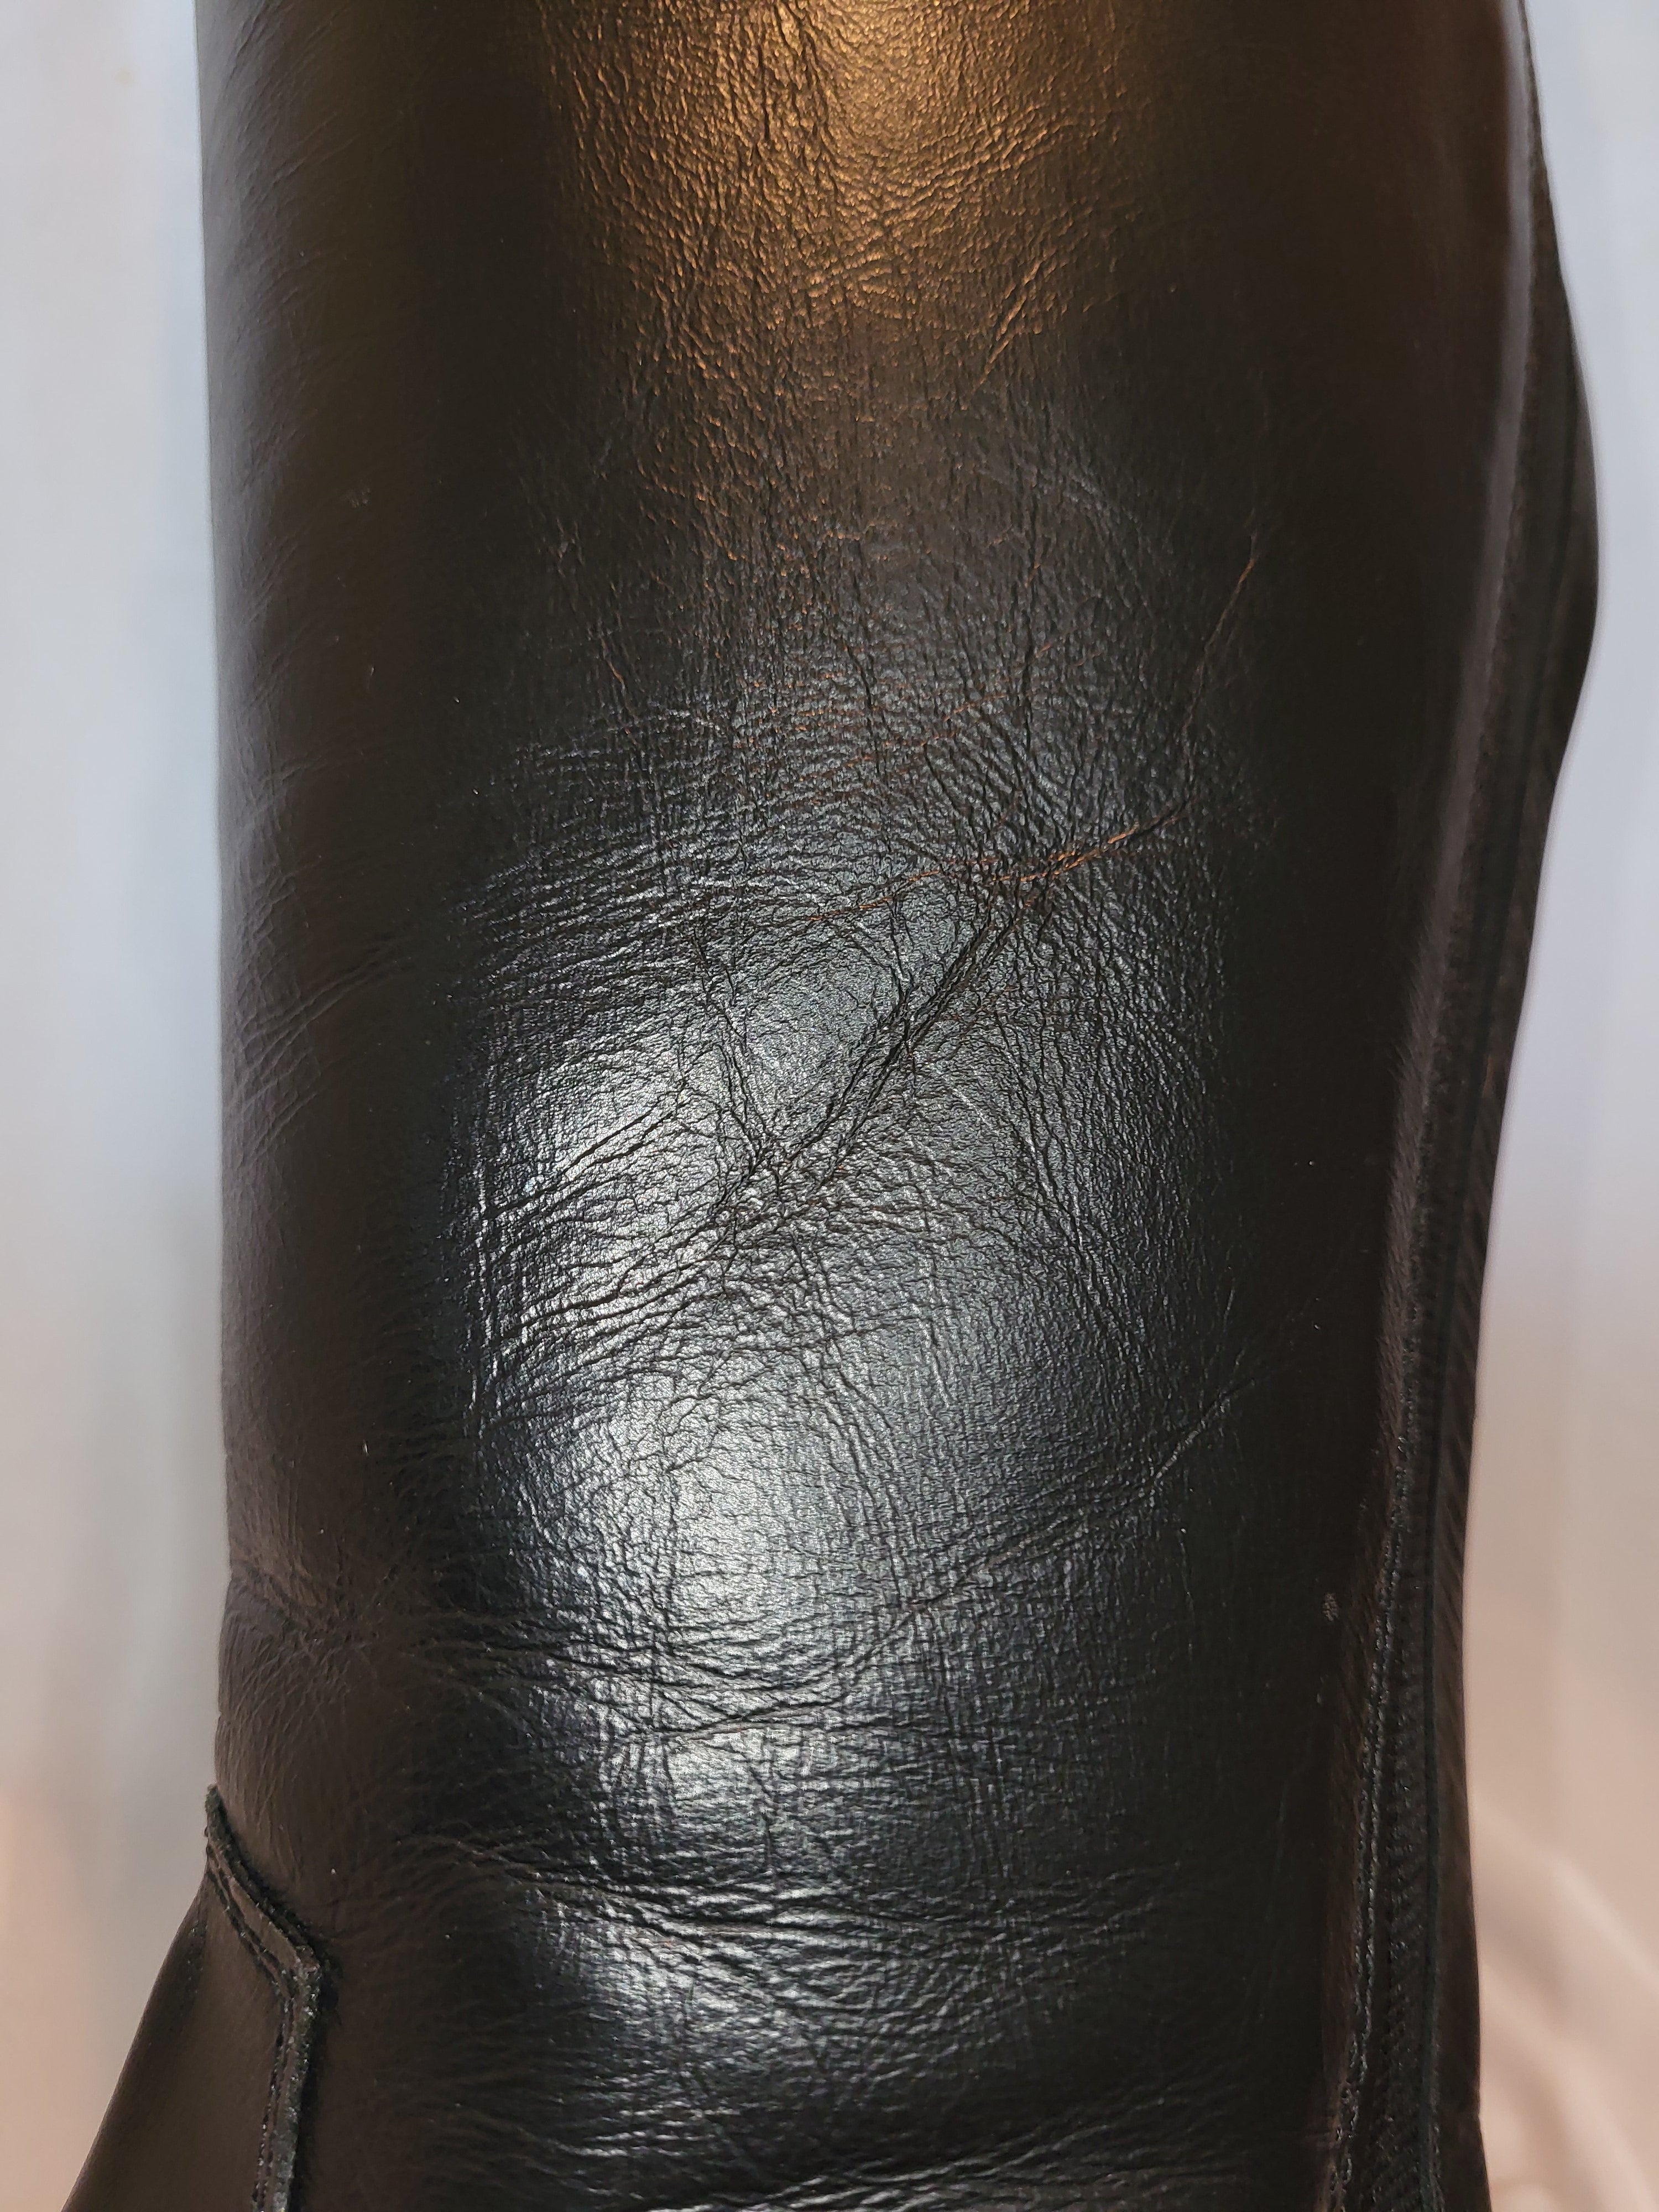 TuffRider Ladies Baroque Field Boots - Size 9 Wide